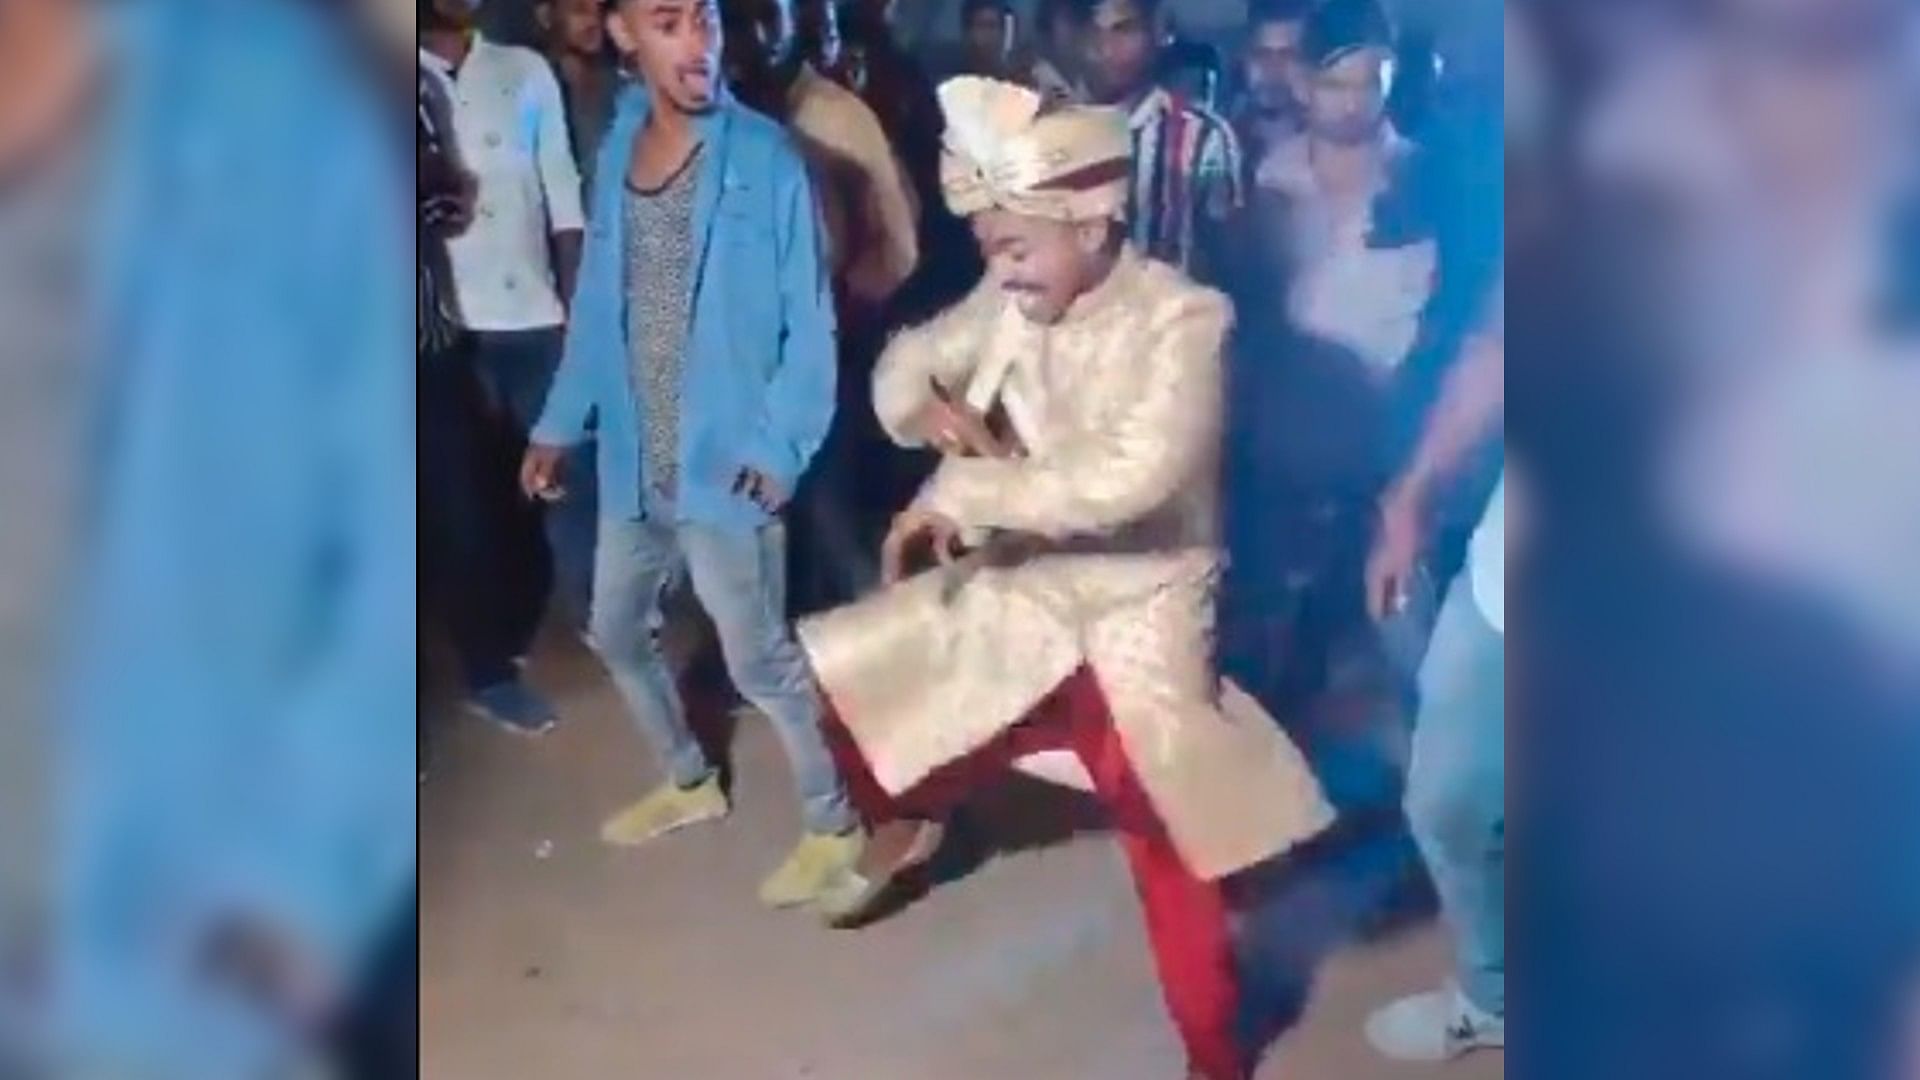 Groom Dance Video groom dance in wedding tiger shroff hrithik roshan fail front of the groom